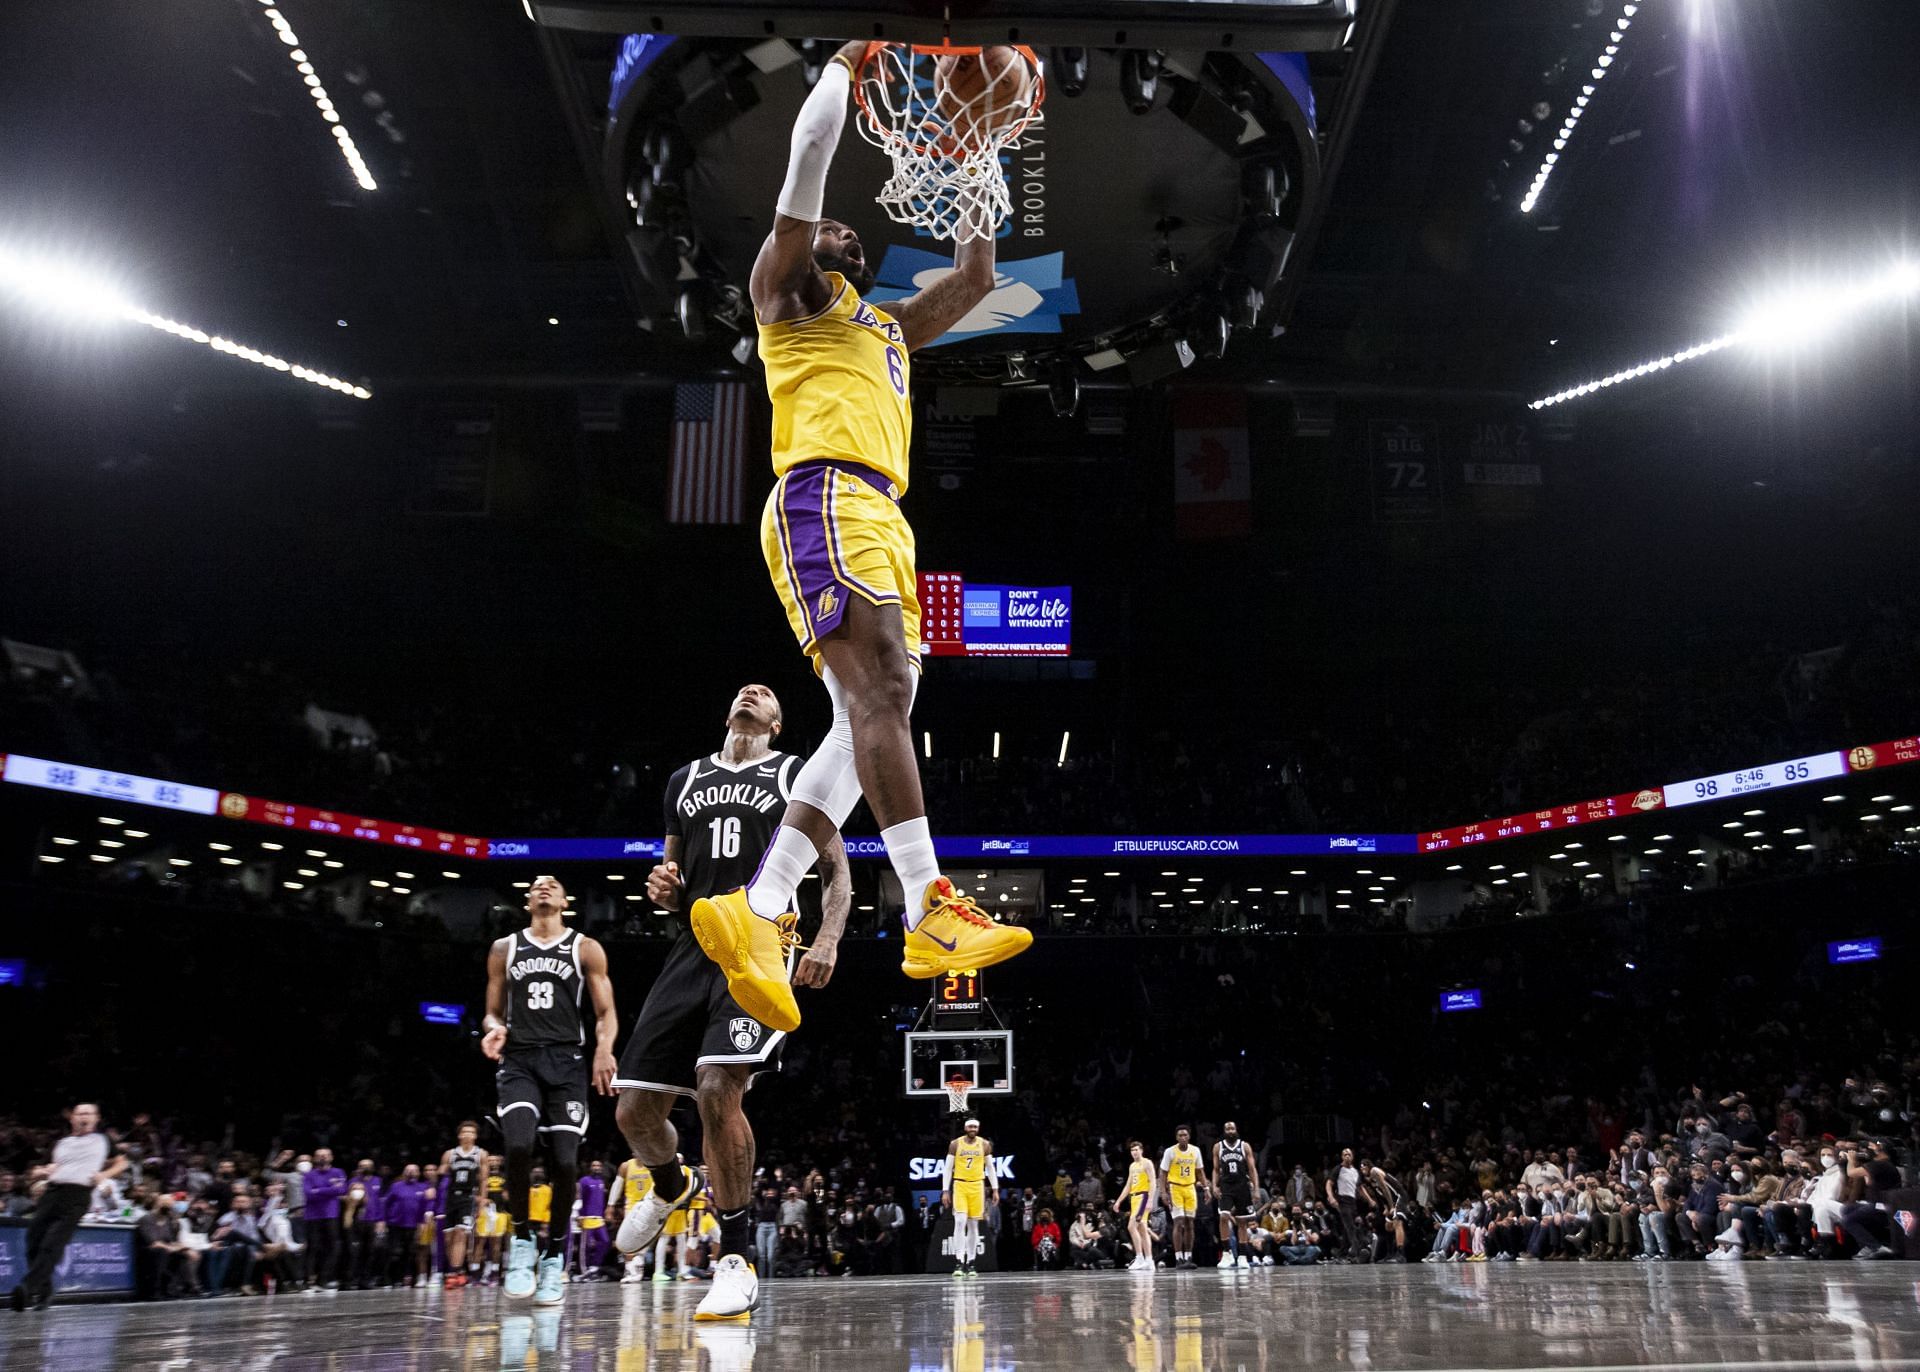 PHOTOS: Lakers at 76ers (12/16/16)